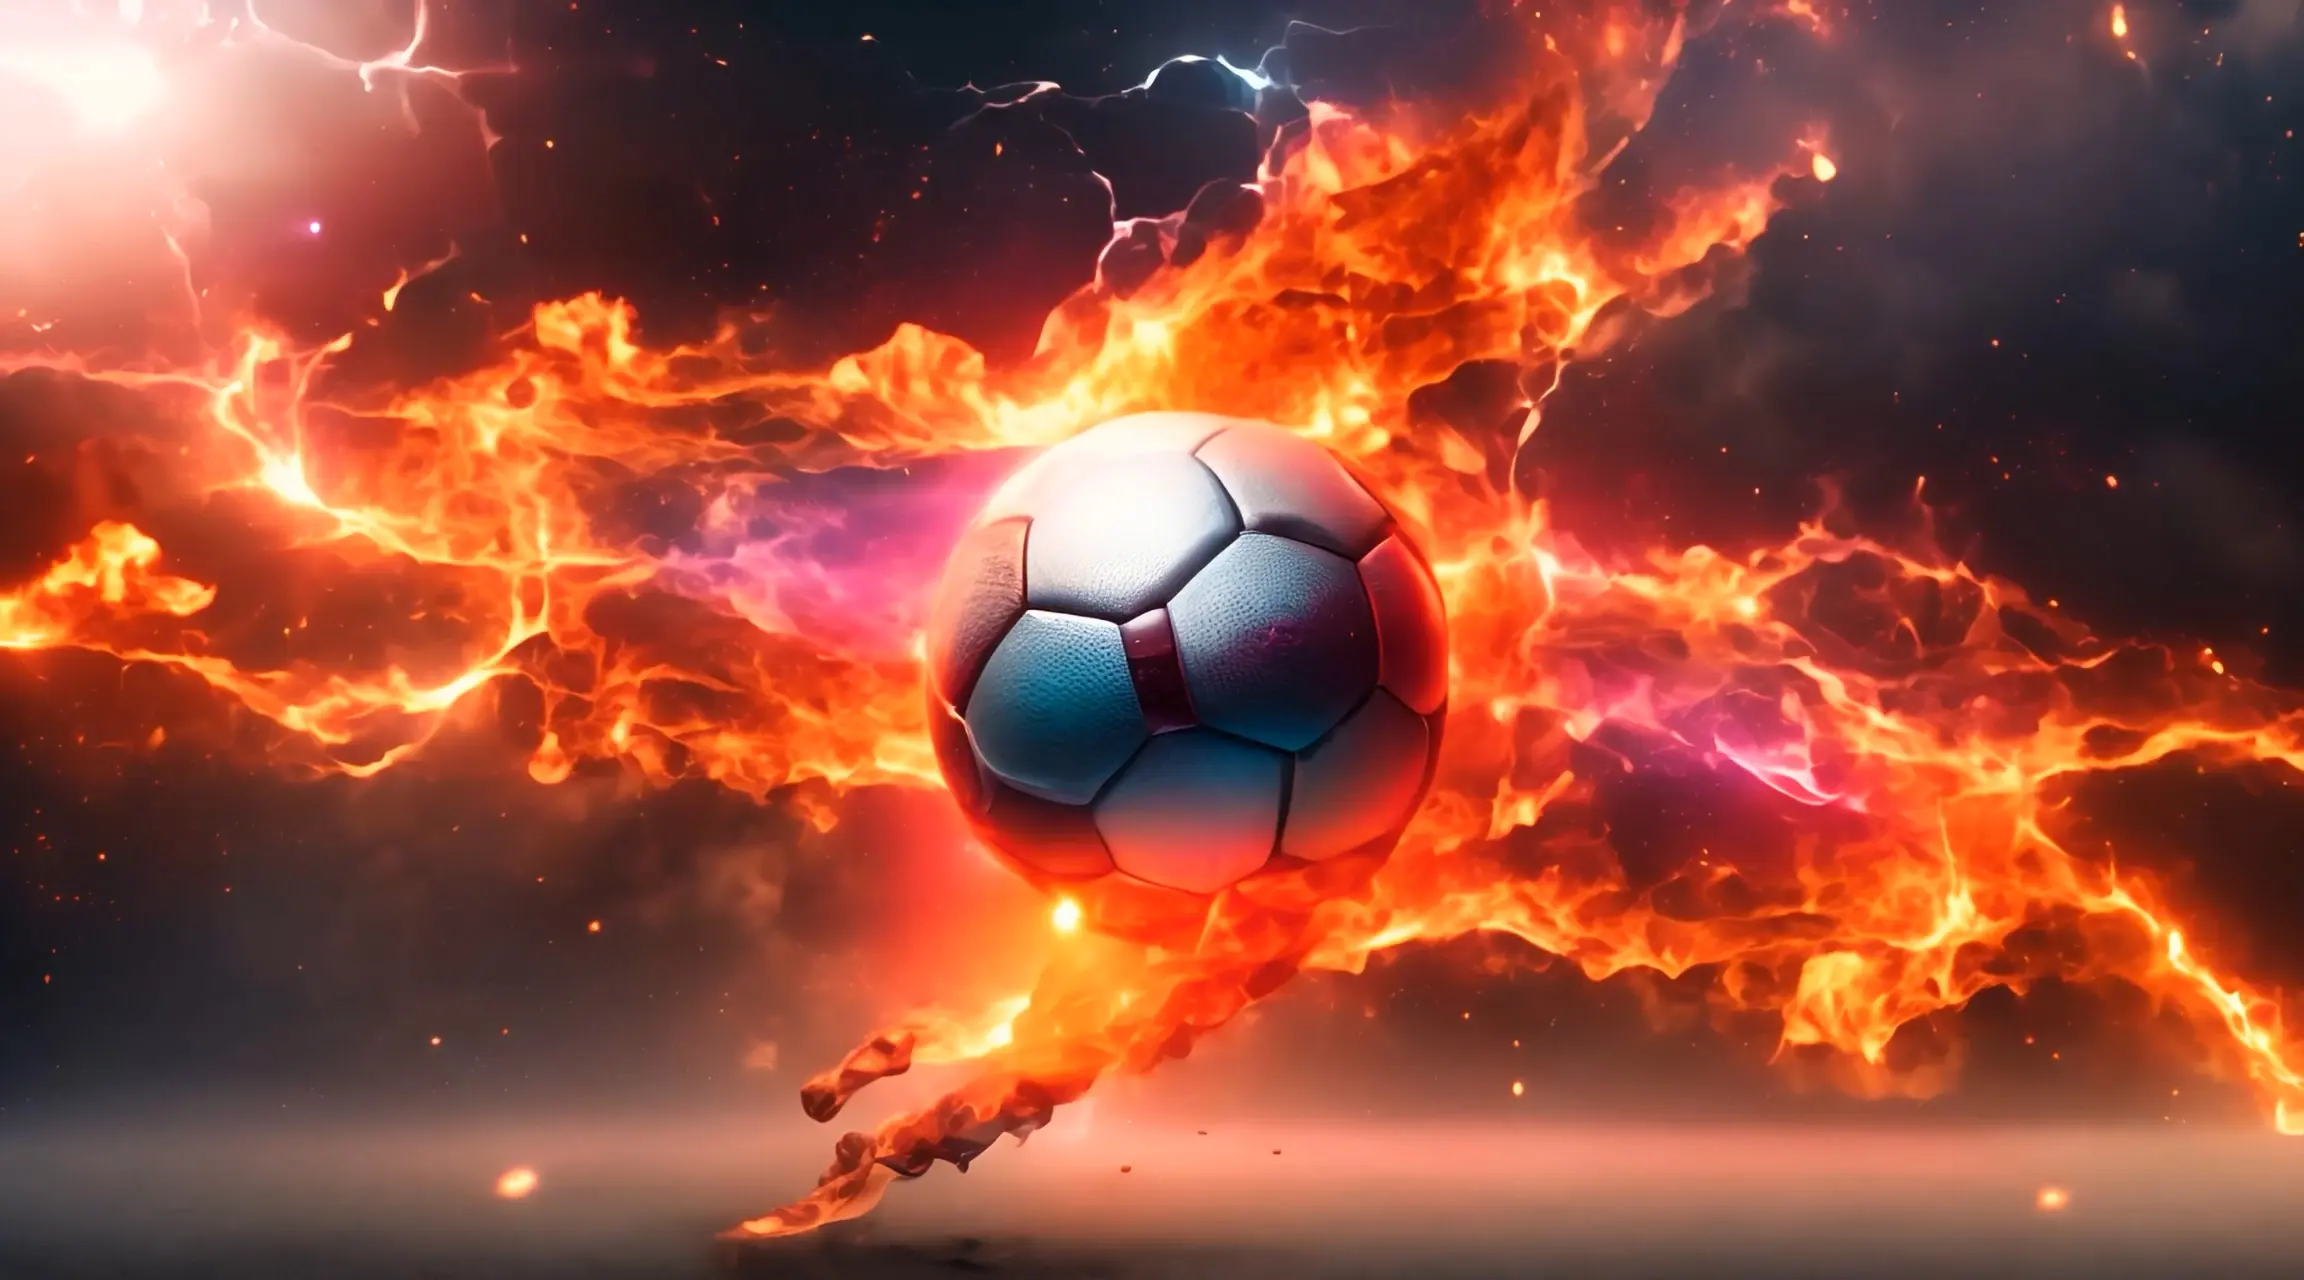 Fiery Soccer Game Energy High-Impact Backdrop Loop